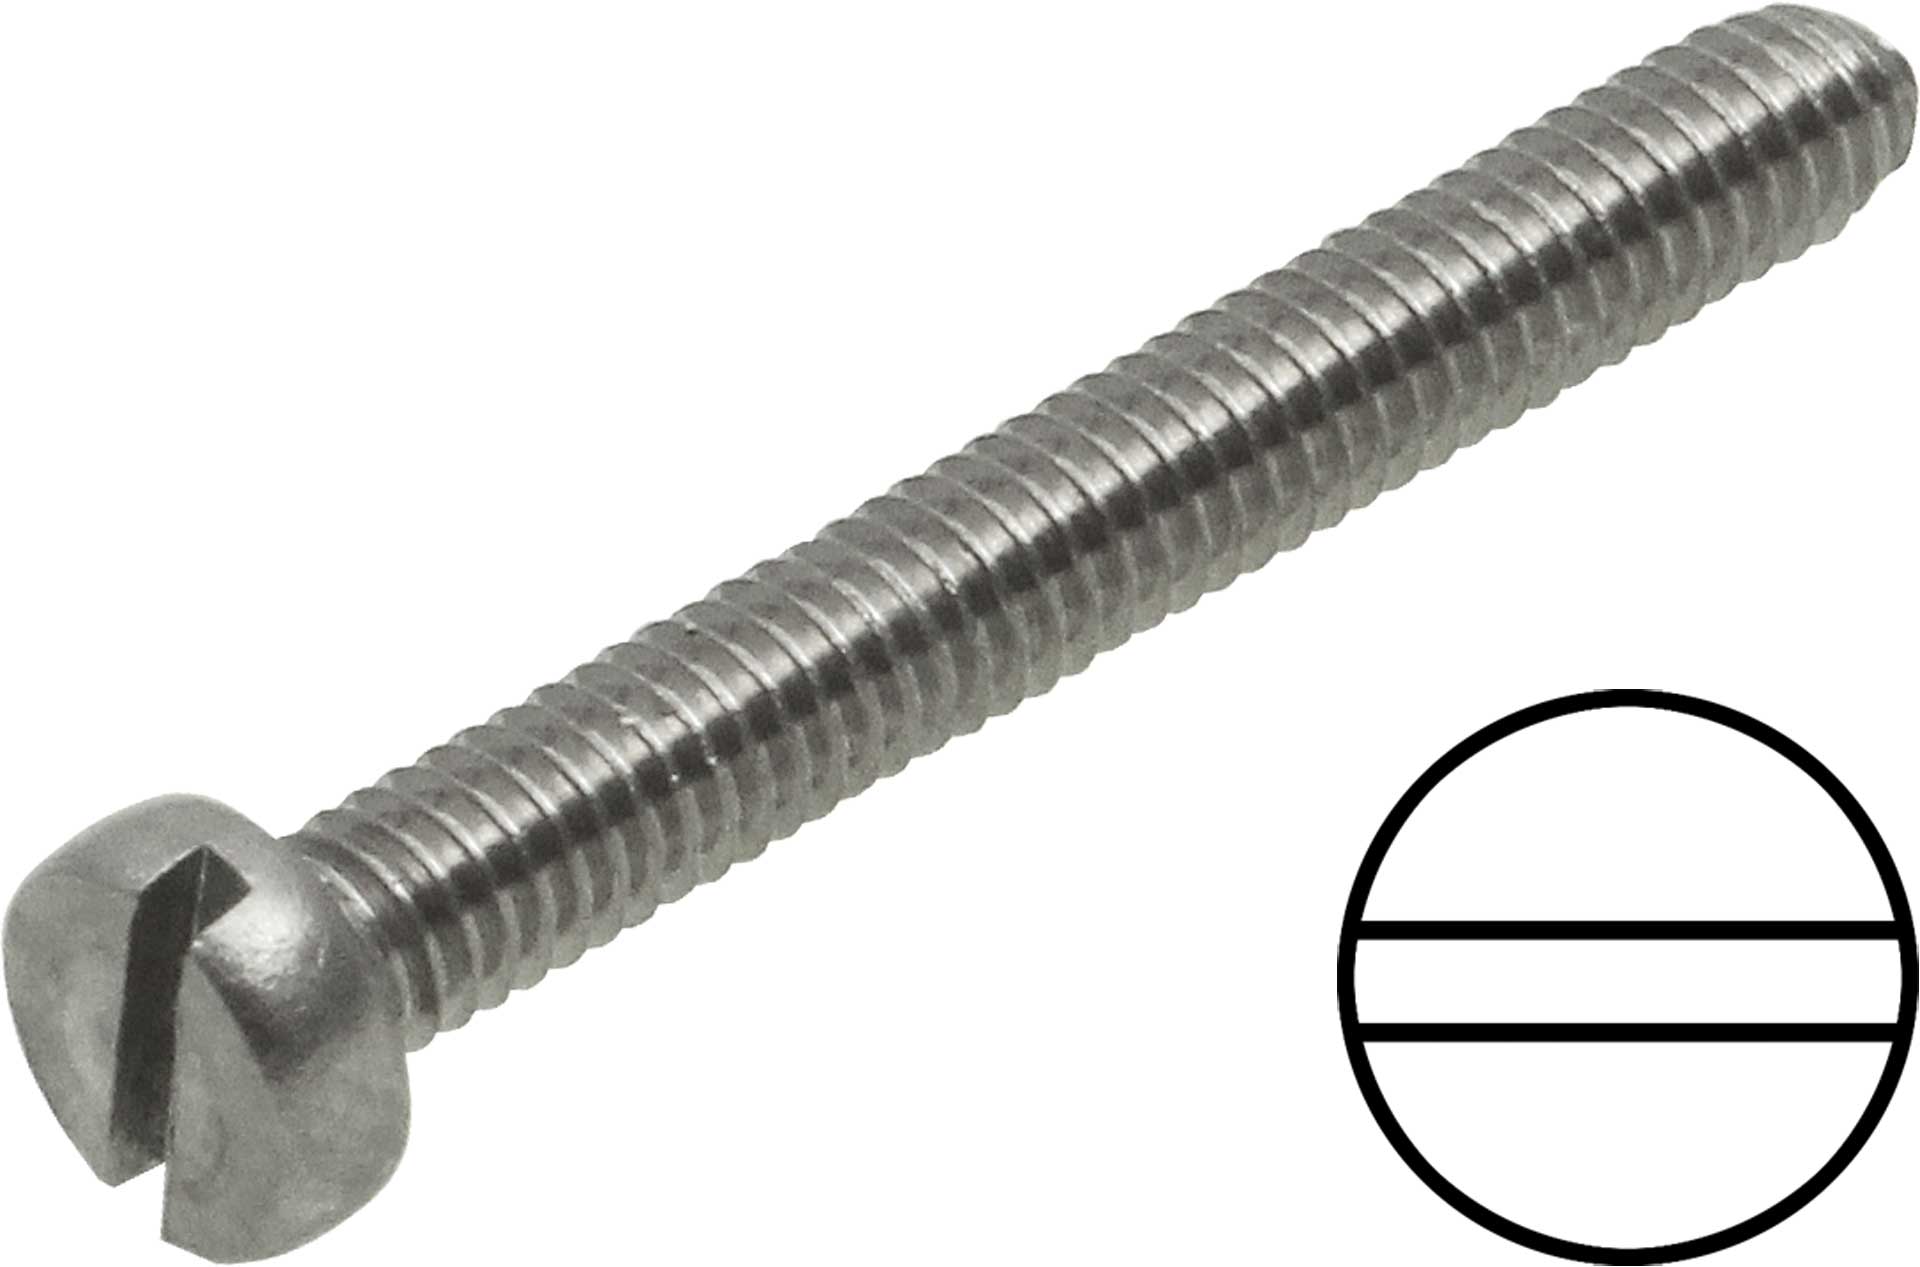 Modellbau Lindinger Cylinder head screws M2/8mm slotted Stainless steel, rustproof 20pcs.